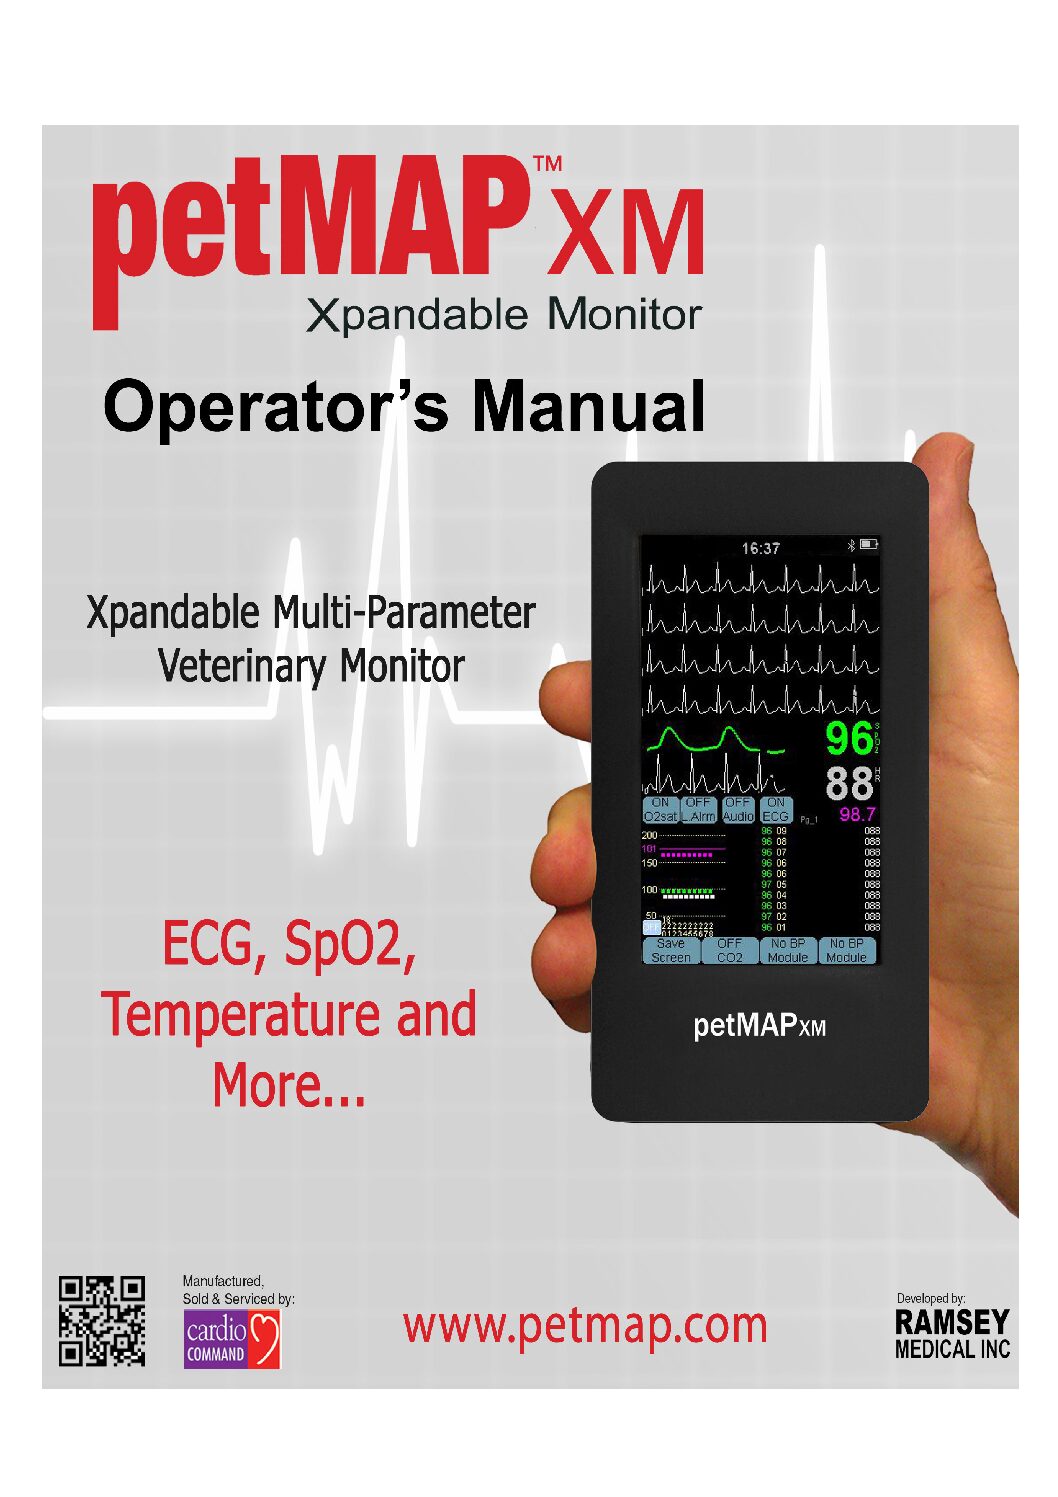 AWR400375-C Manual, petMAP XM